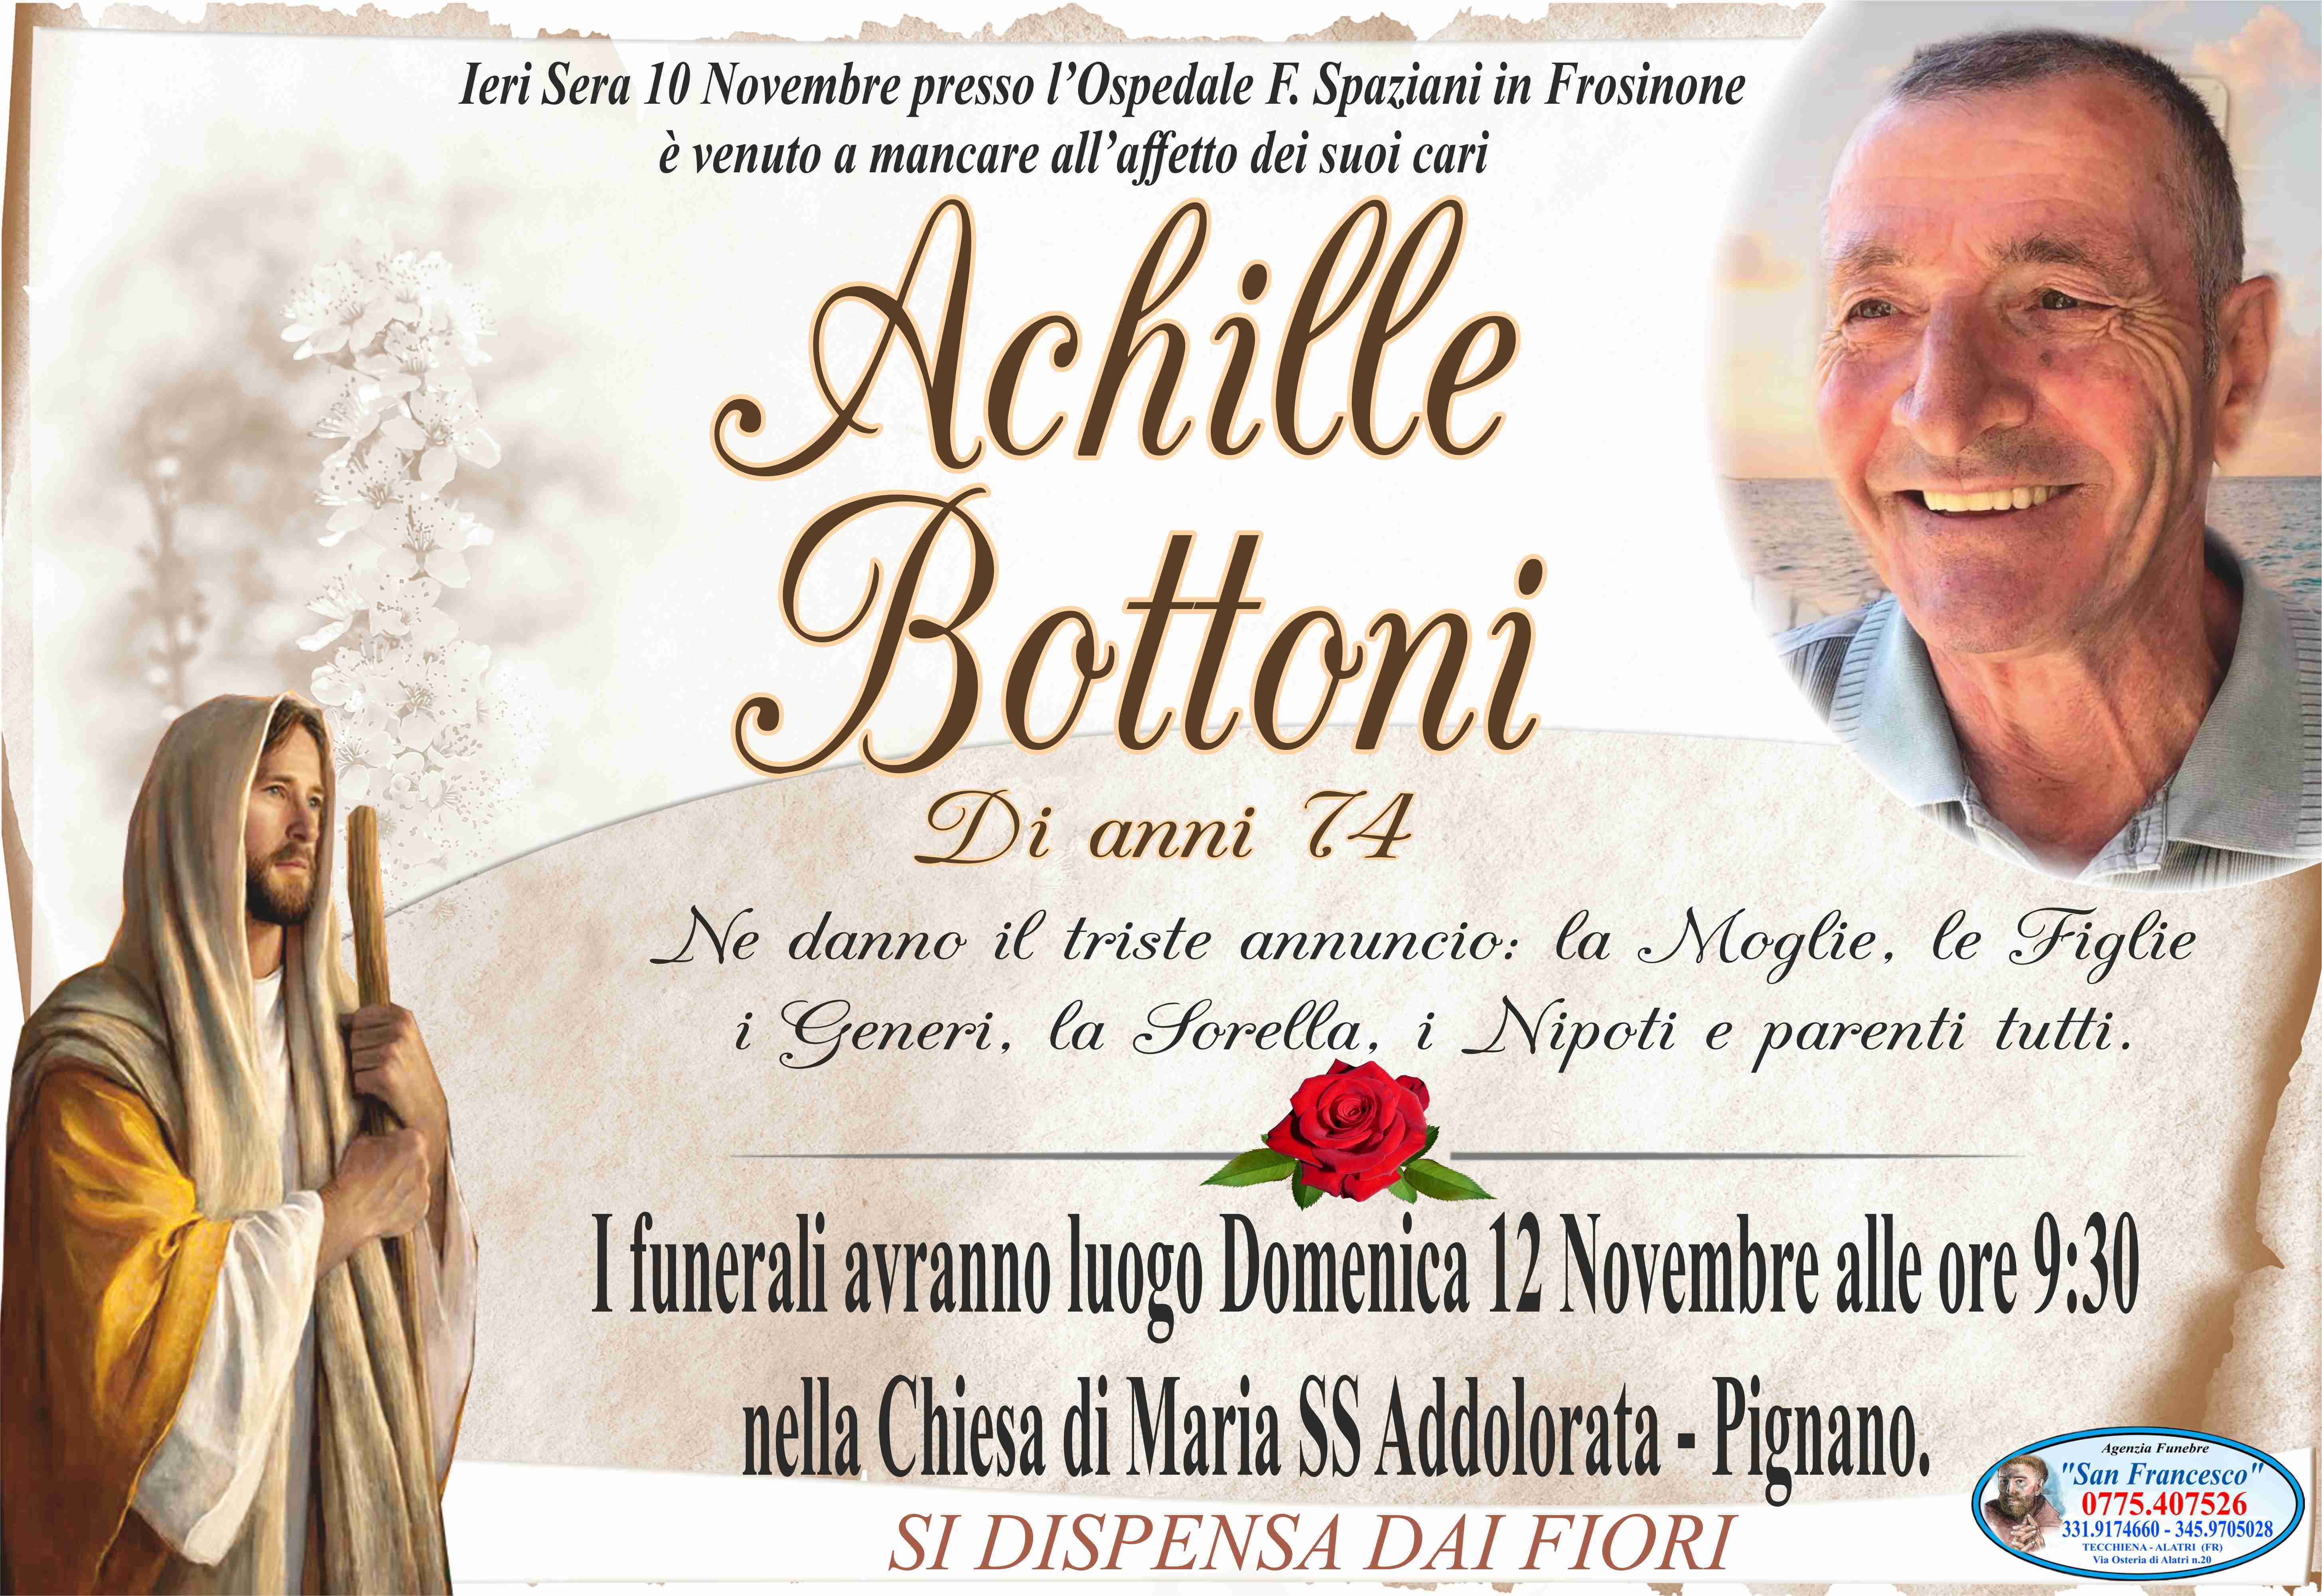 Achille Bottoni